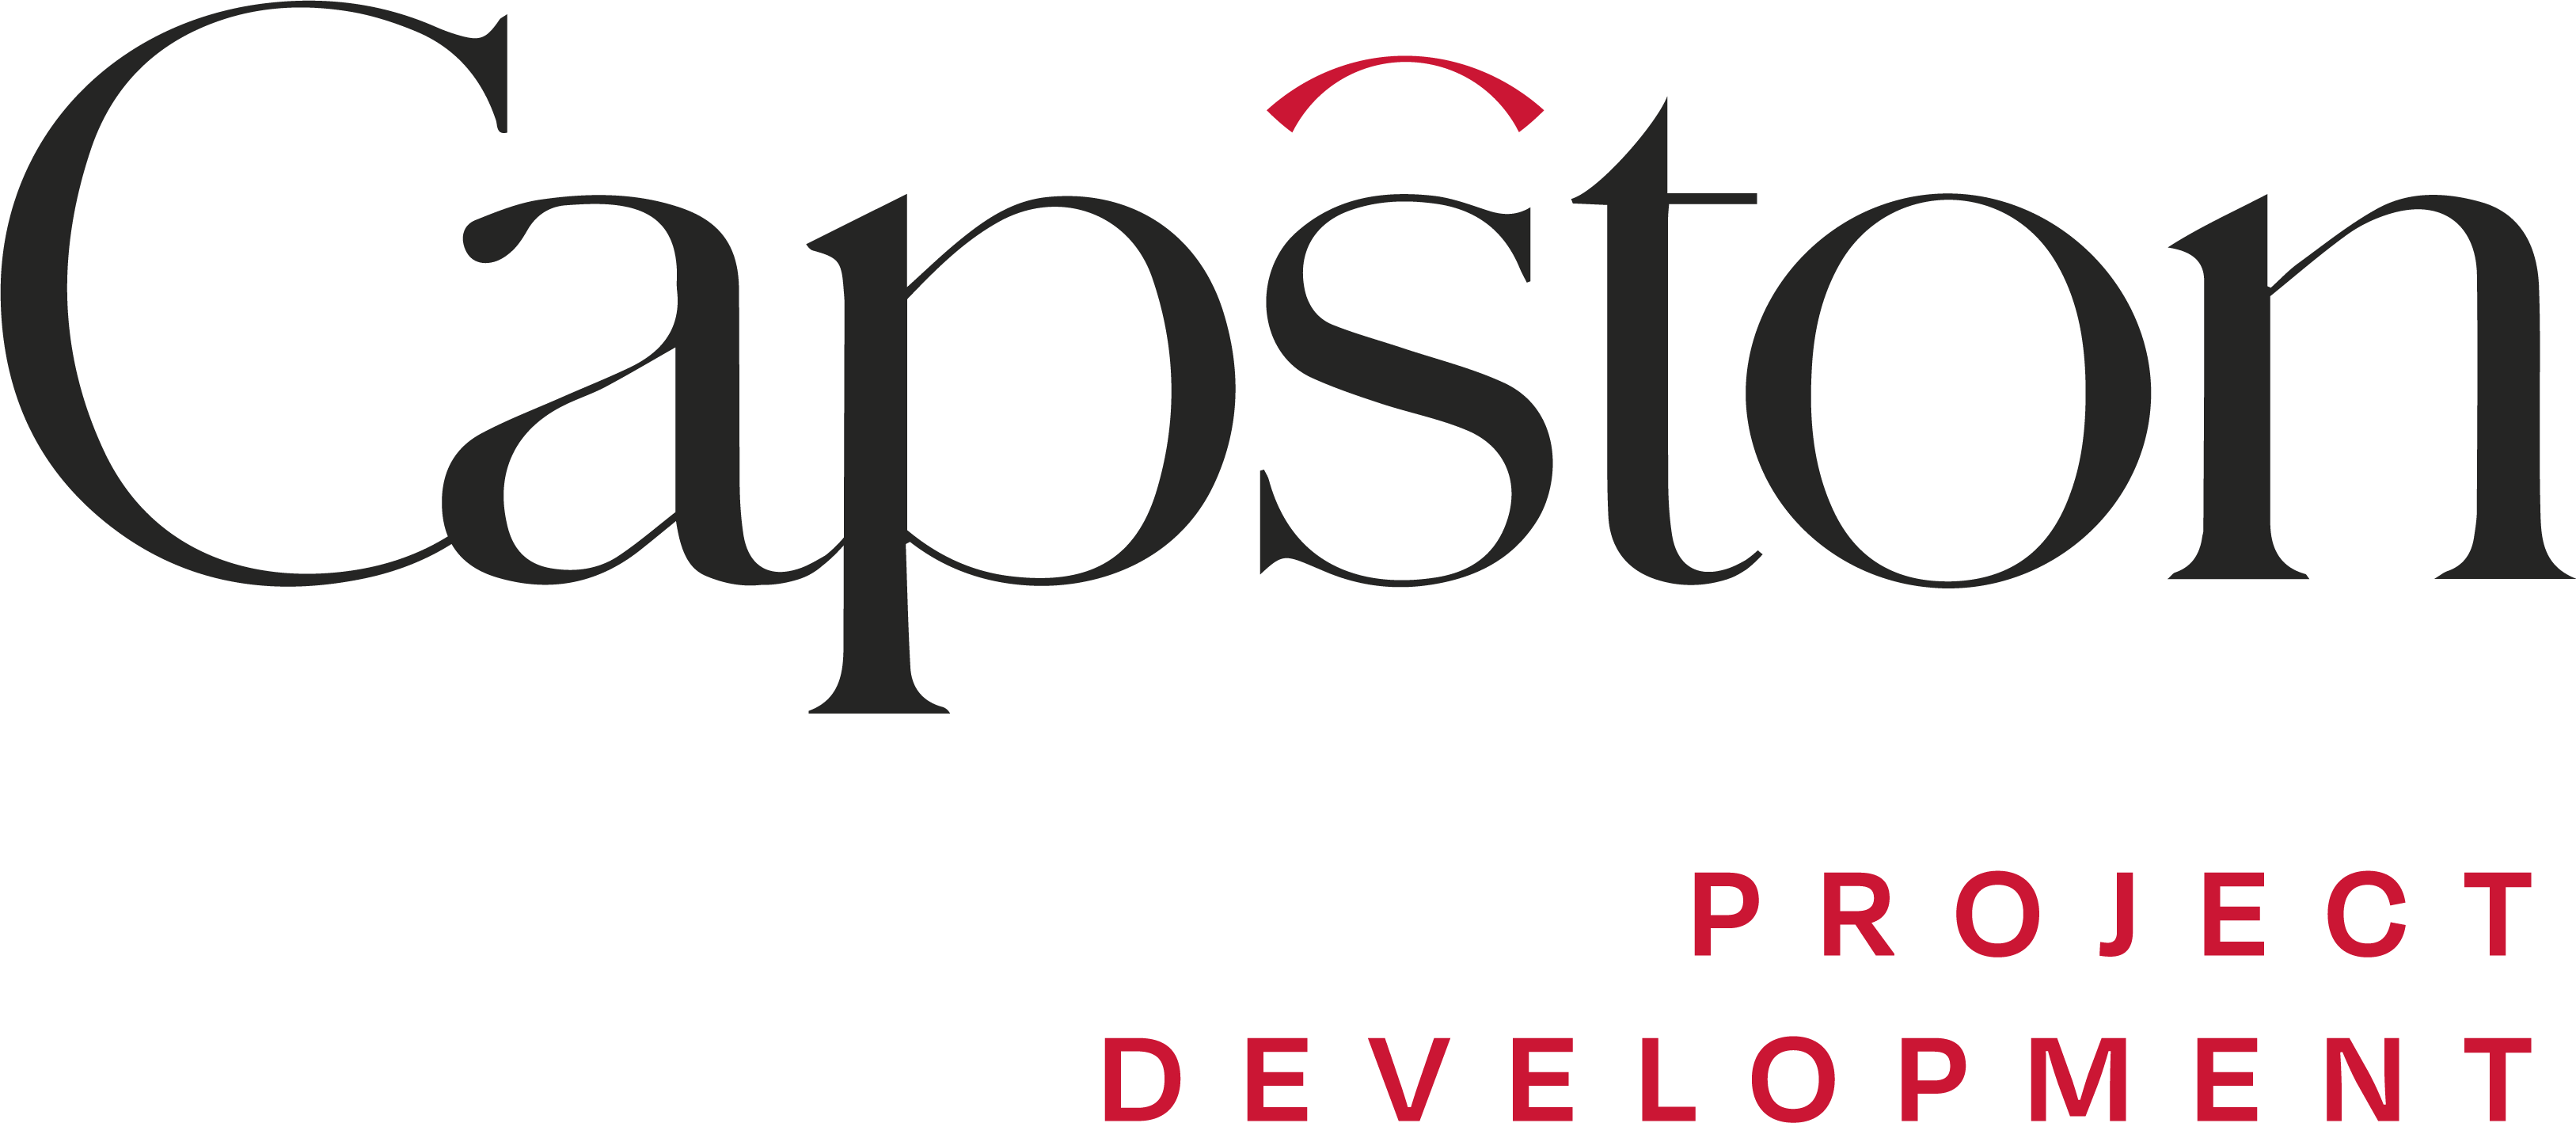 Logo Capston Project Development